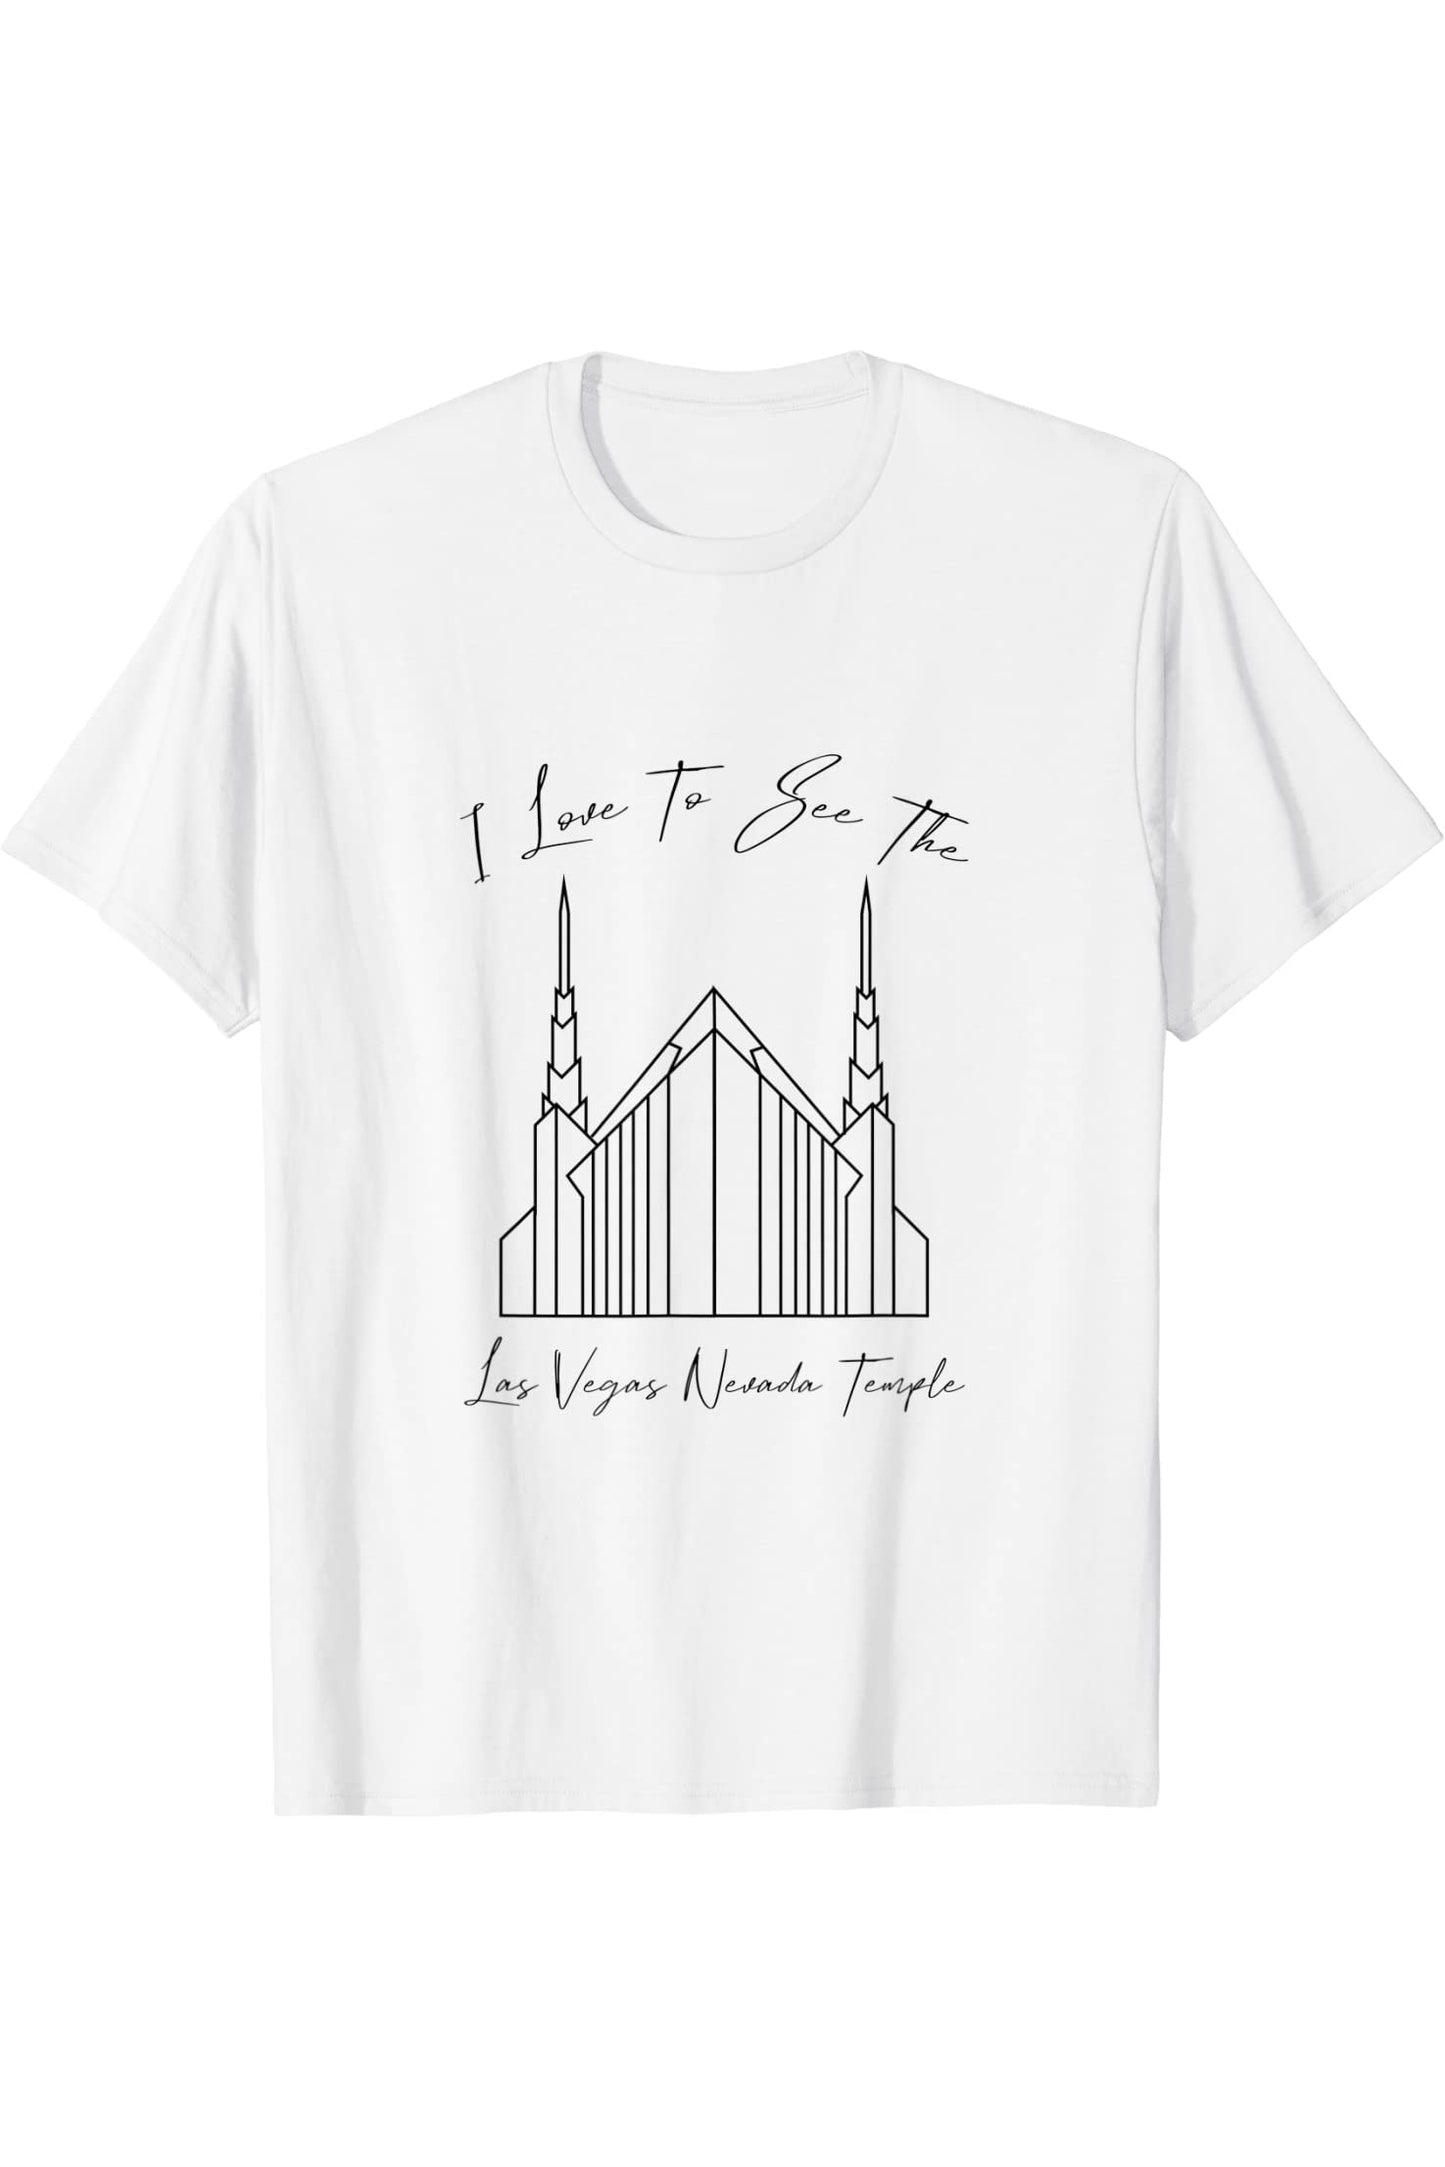 Las Vegas Nevada Temple T-Shirt - Calligraphy Style (English) US